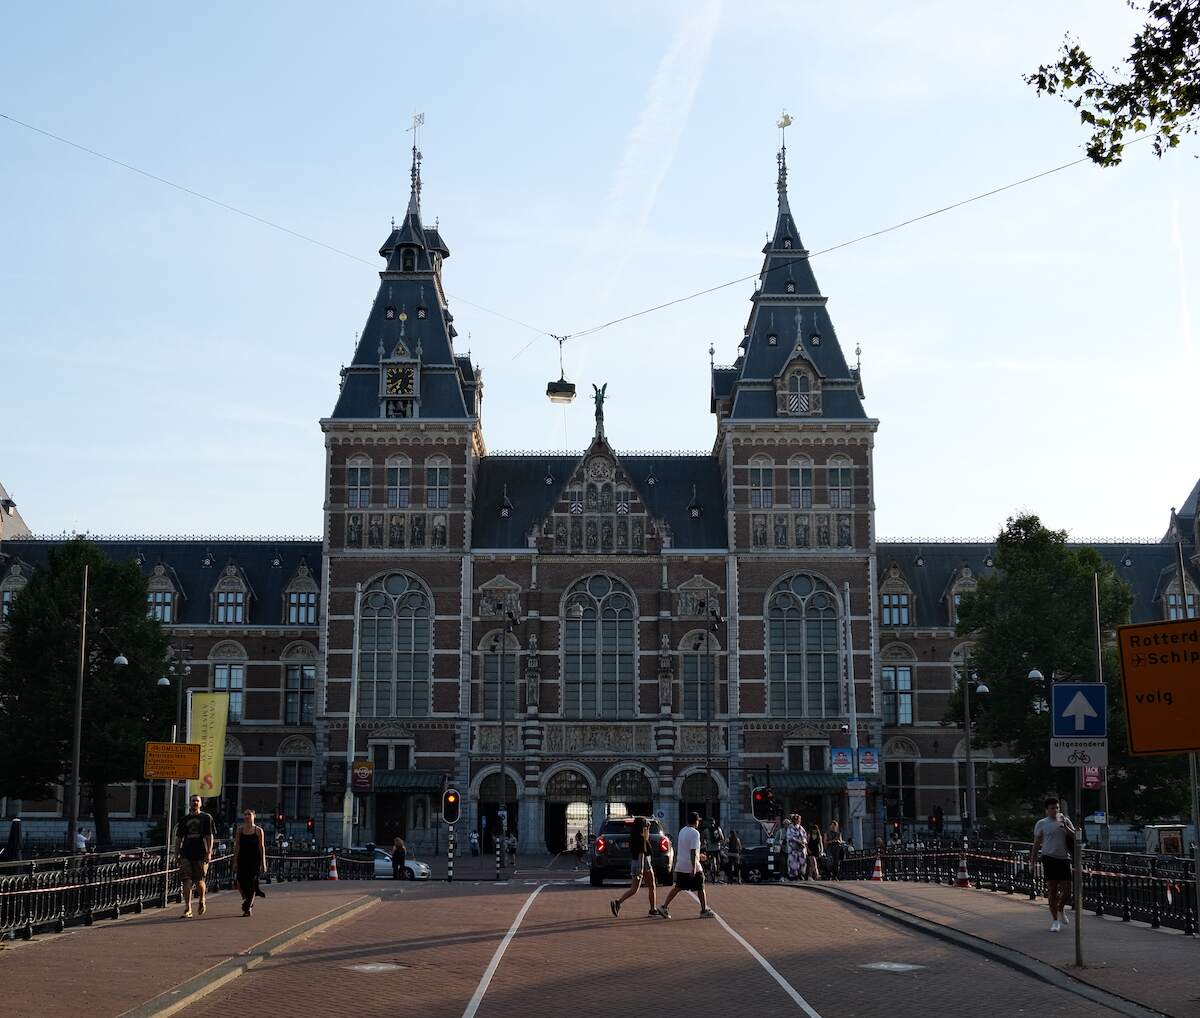 exterior of the Rijksmuseum in Amsterdam, Netherlands